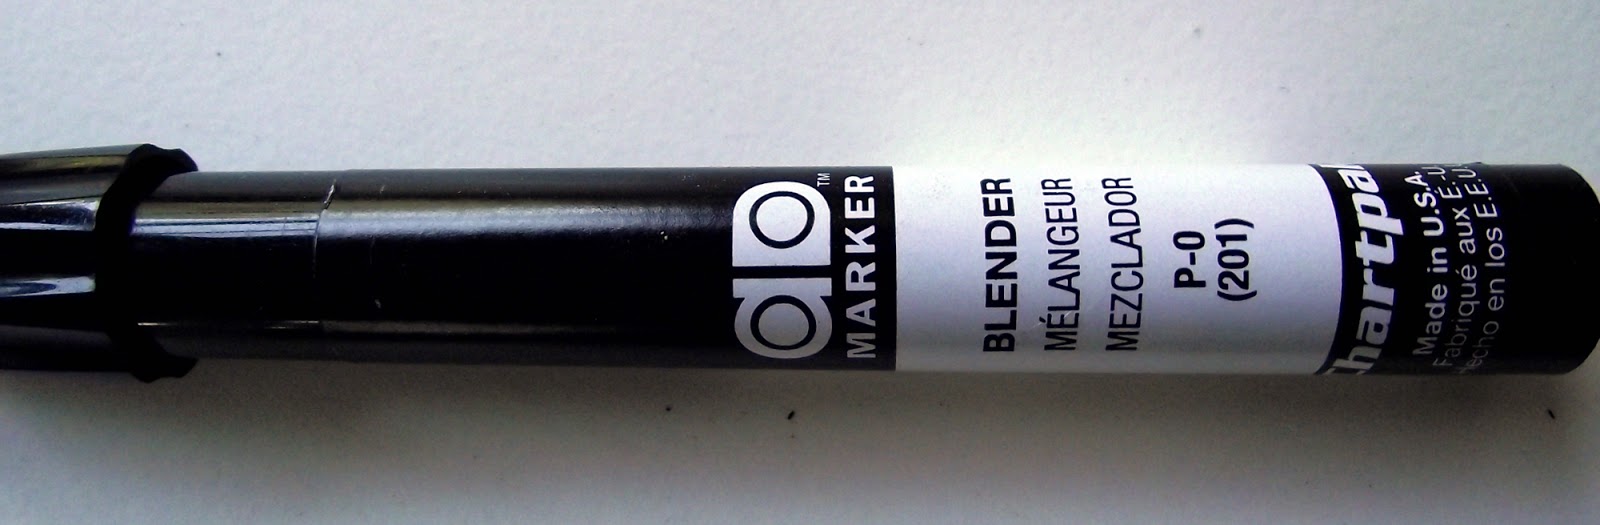 Chartpak Blender Pen Marker Tiger Pens